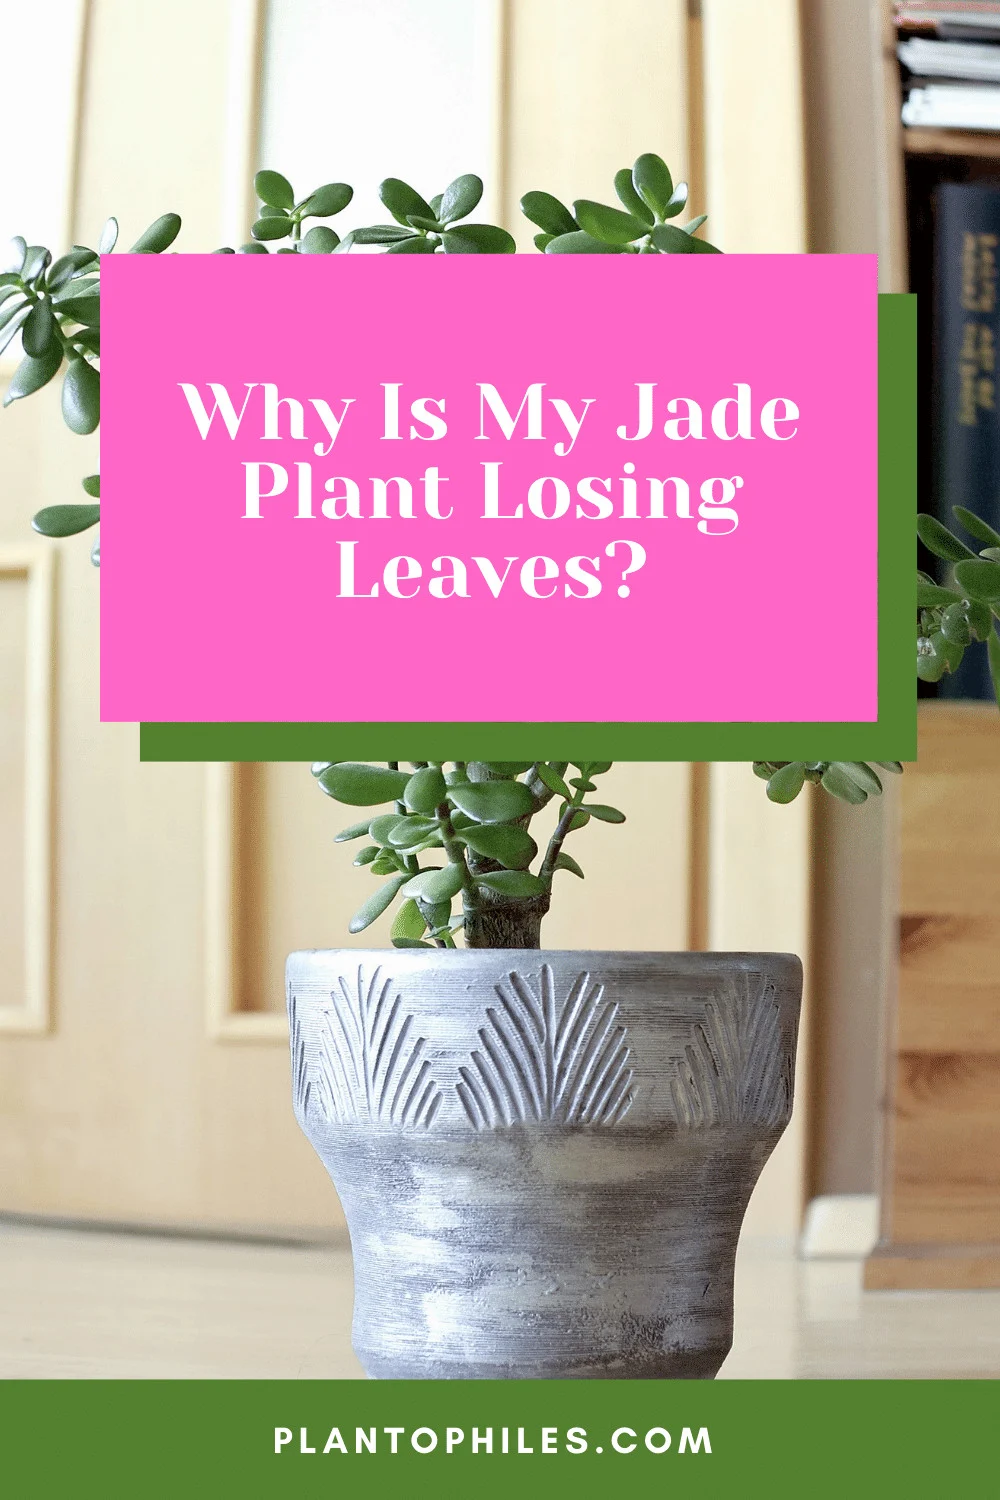 Why Is My Jade Plant Losing Leaves